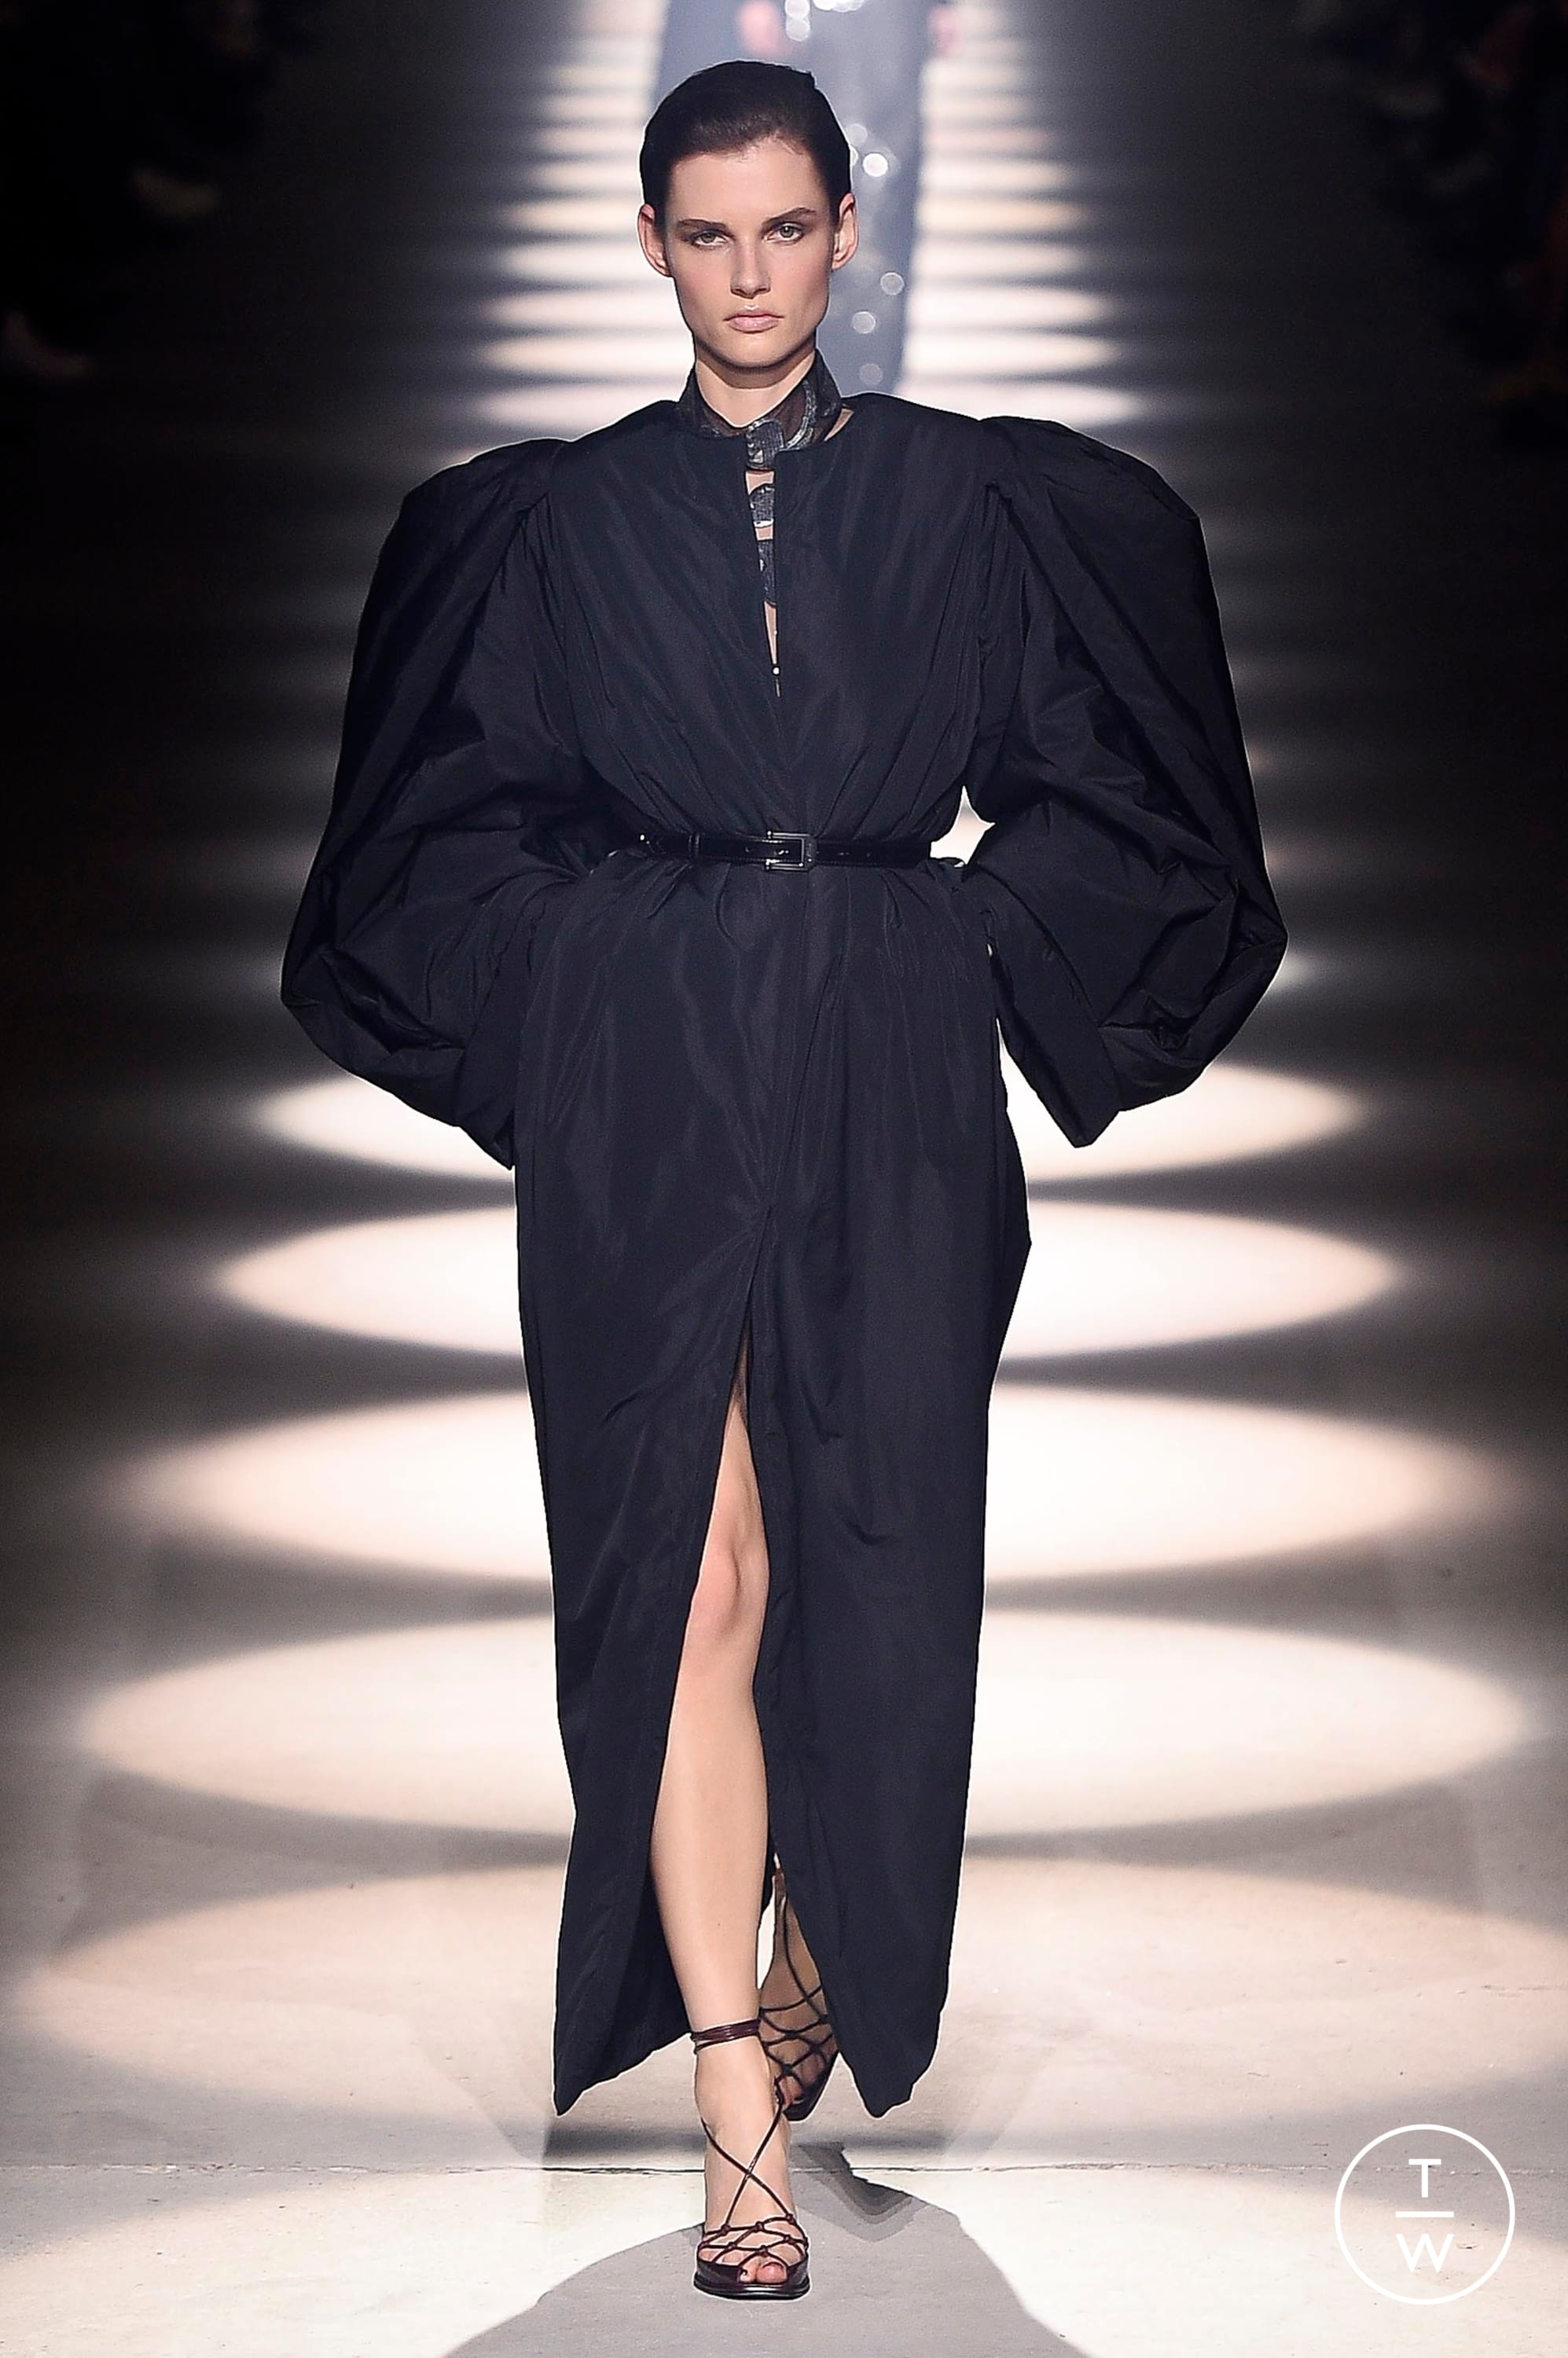 Pris kranium Pil Givenchy FW20 womenswear #31 - The Fashion Search Engine - TAGWALK